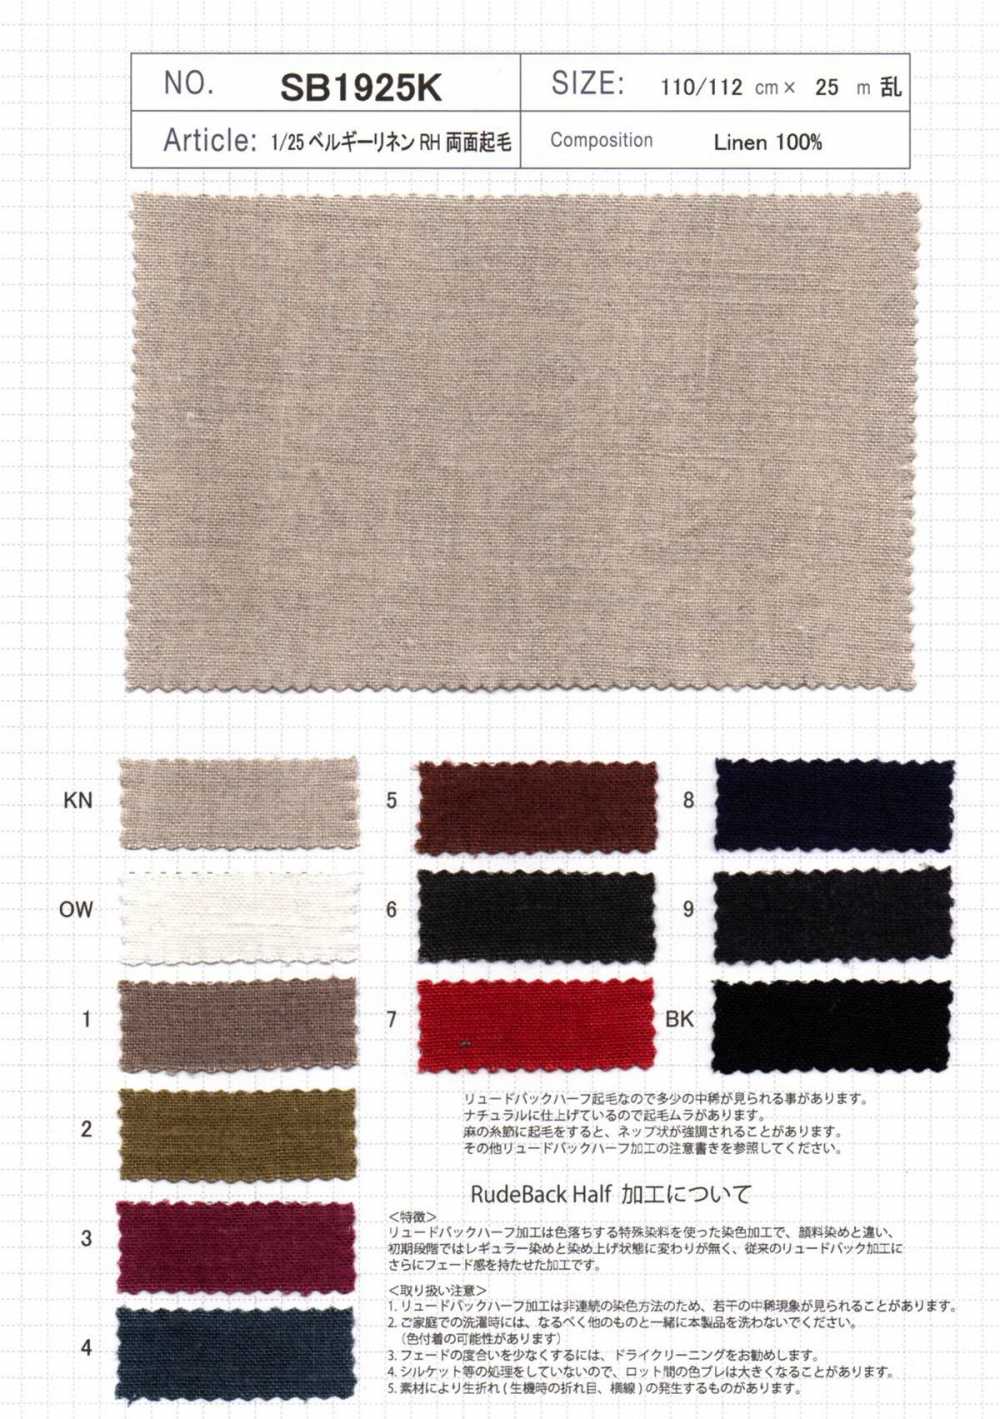 SB1925K Product Name 1/25 Belgian Linen RH Fuzzy On Both Sides[Textile / Fabric] SHIBAYA